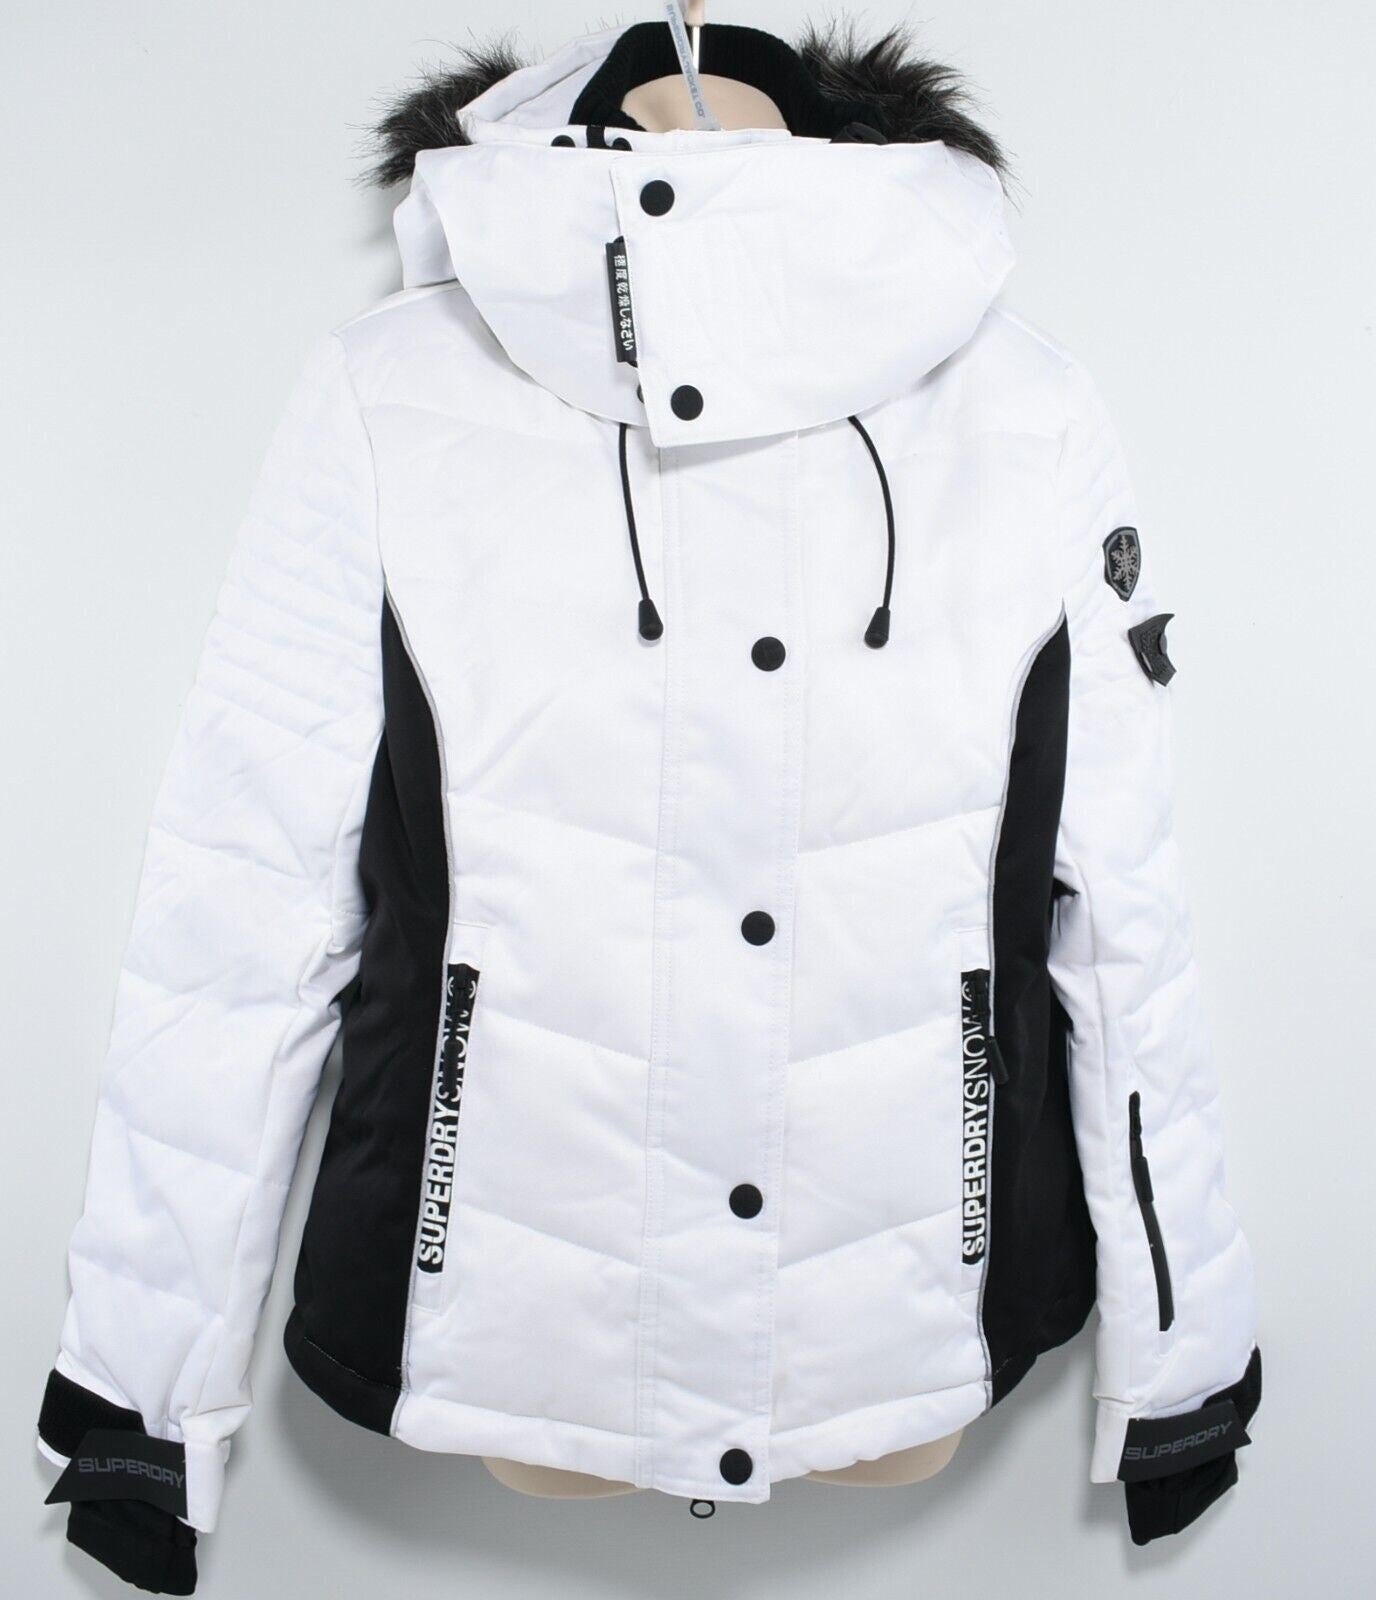 SUPERDRY Womens Ski Jacket, Snow Puffer, White & Black, size L / UK 14